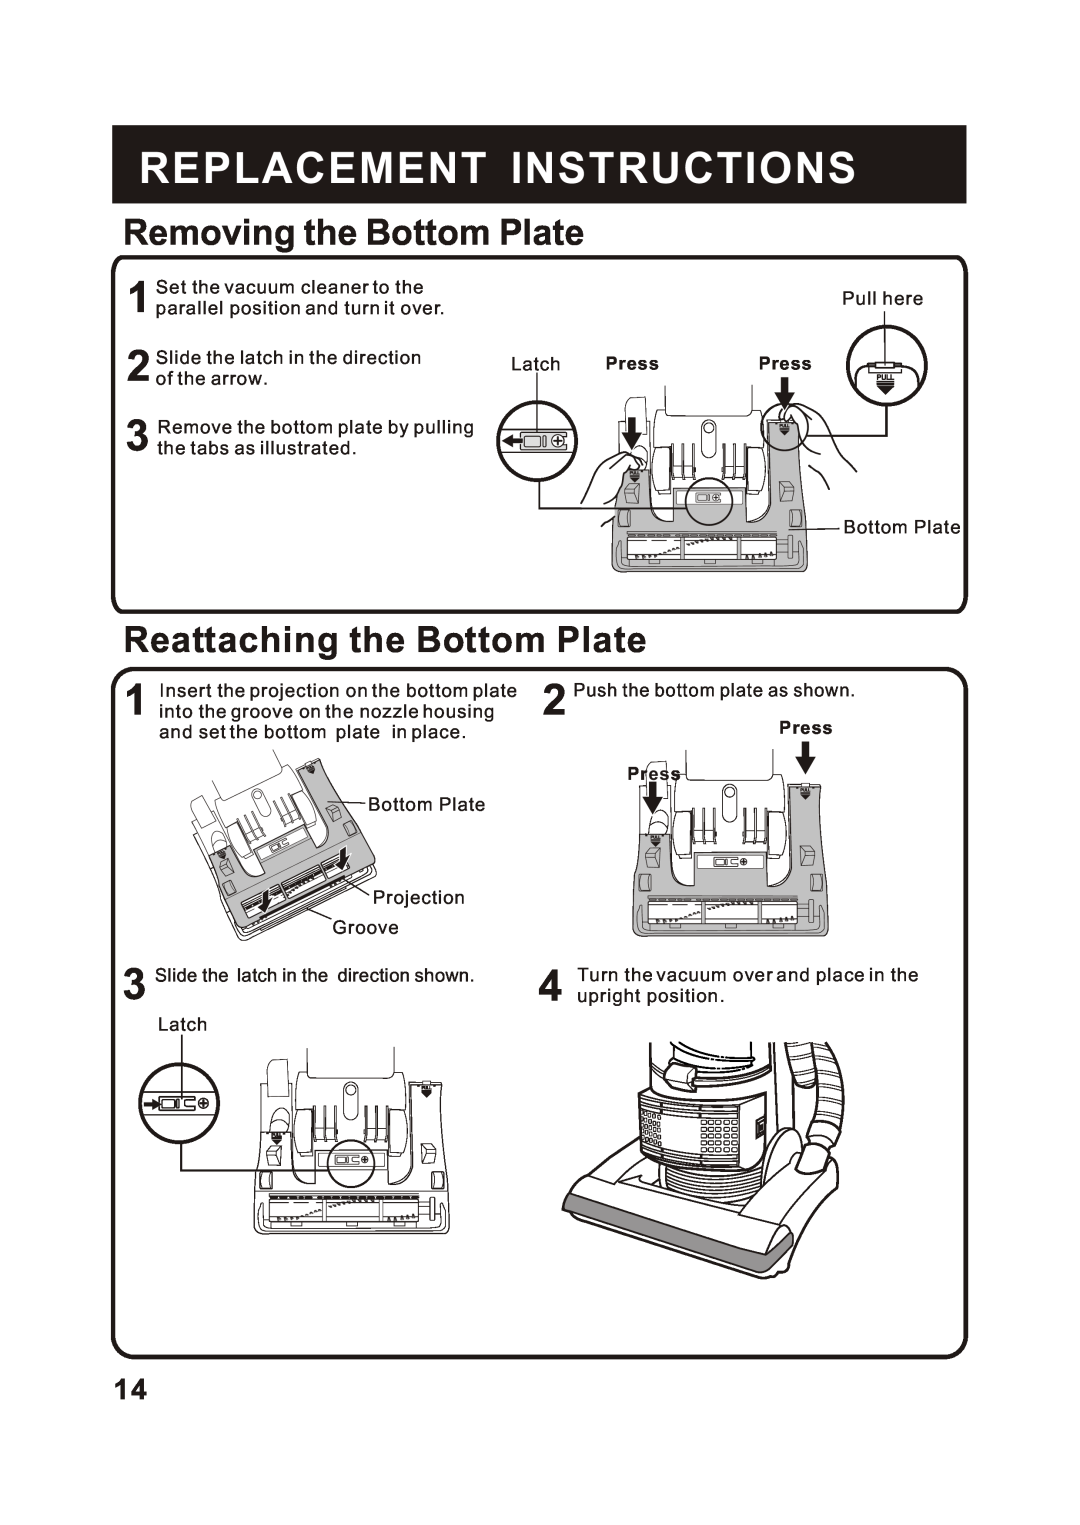 Fantom Vacuum FM741HV instruction manual Removing the Bottom Plate, Reattaching the Bottom Plate, Replacement Instructions 